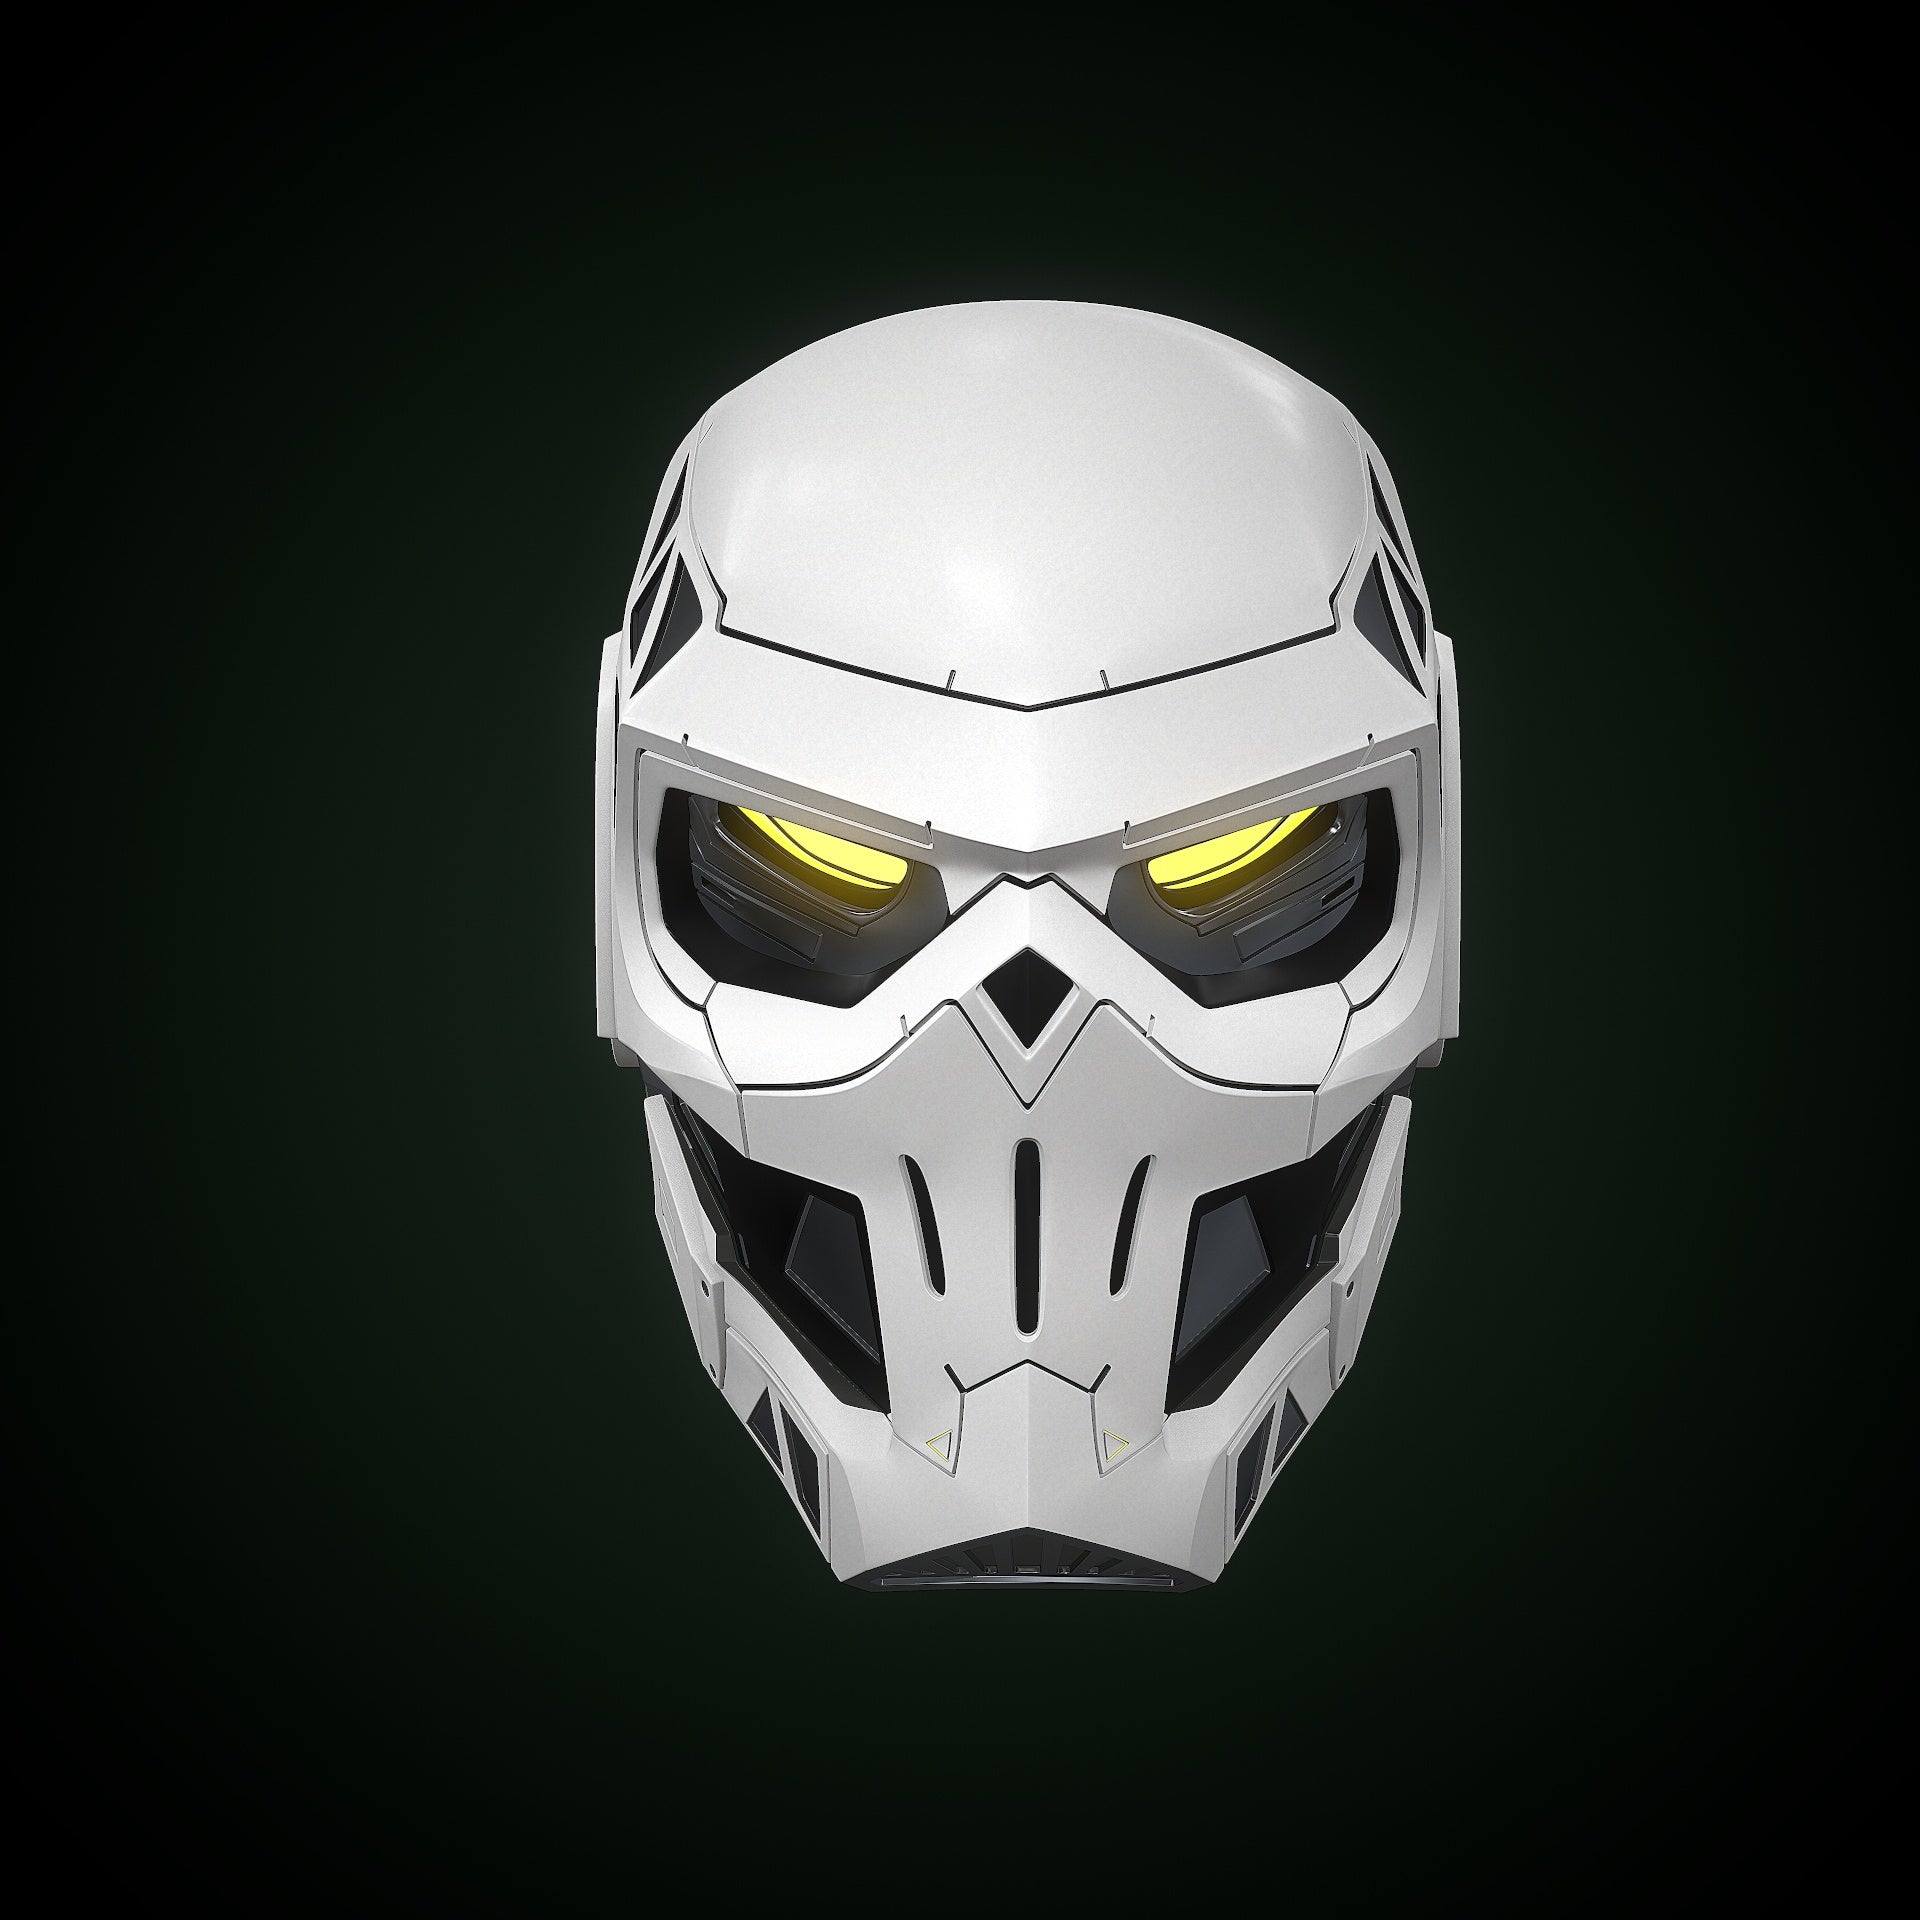 LV TaskMaster Udon Mask by me : r/3Dprinting